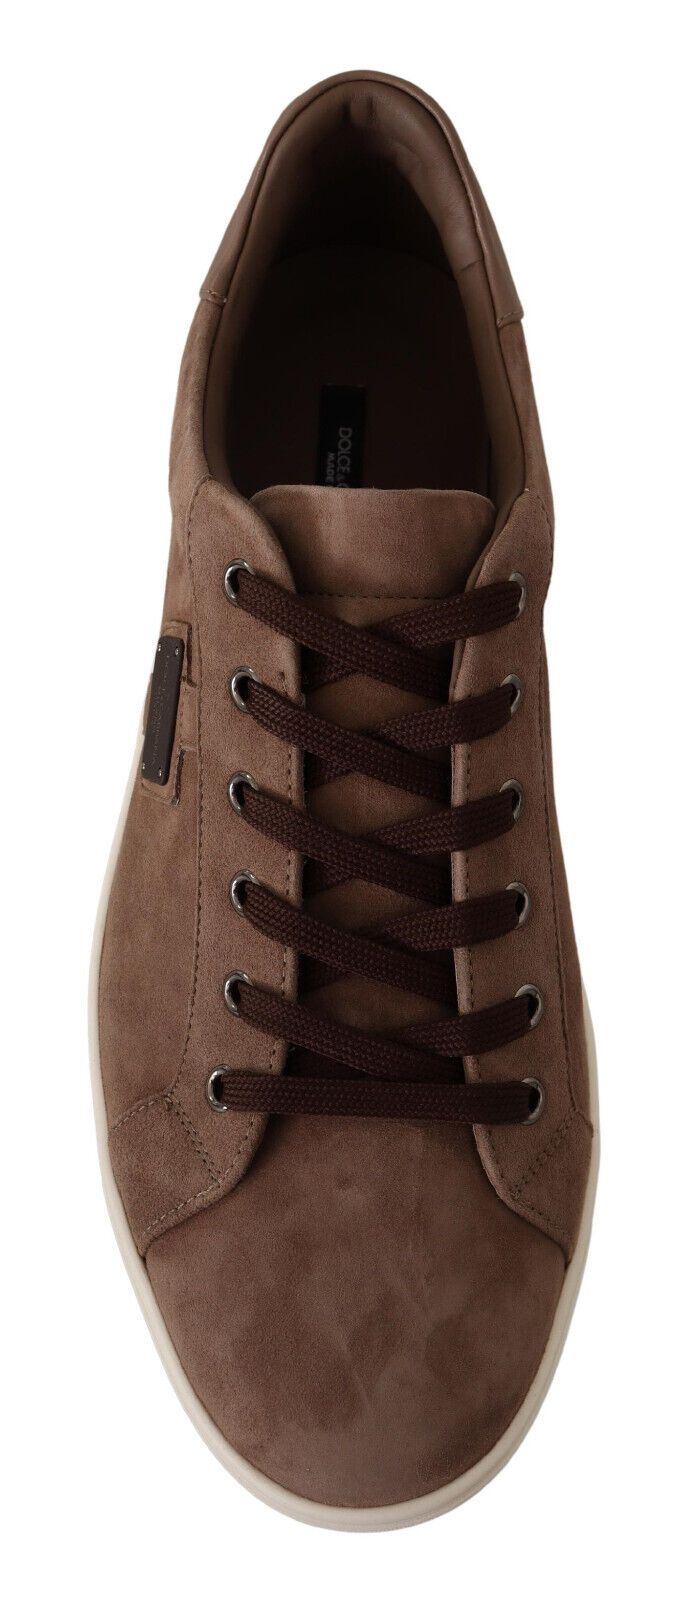 Dolce & Gabbana Brown Wildleder Leder -Sneakers Schuhe